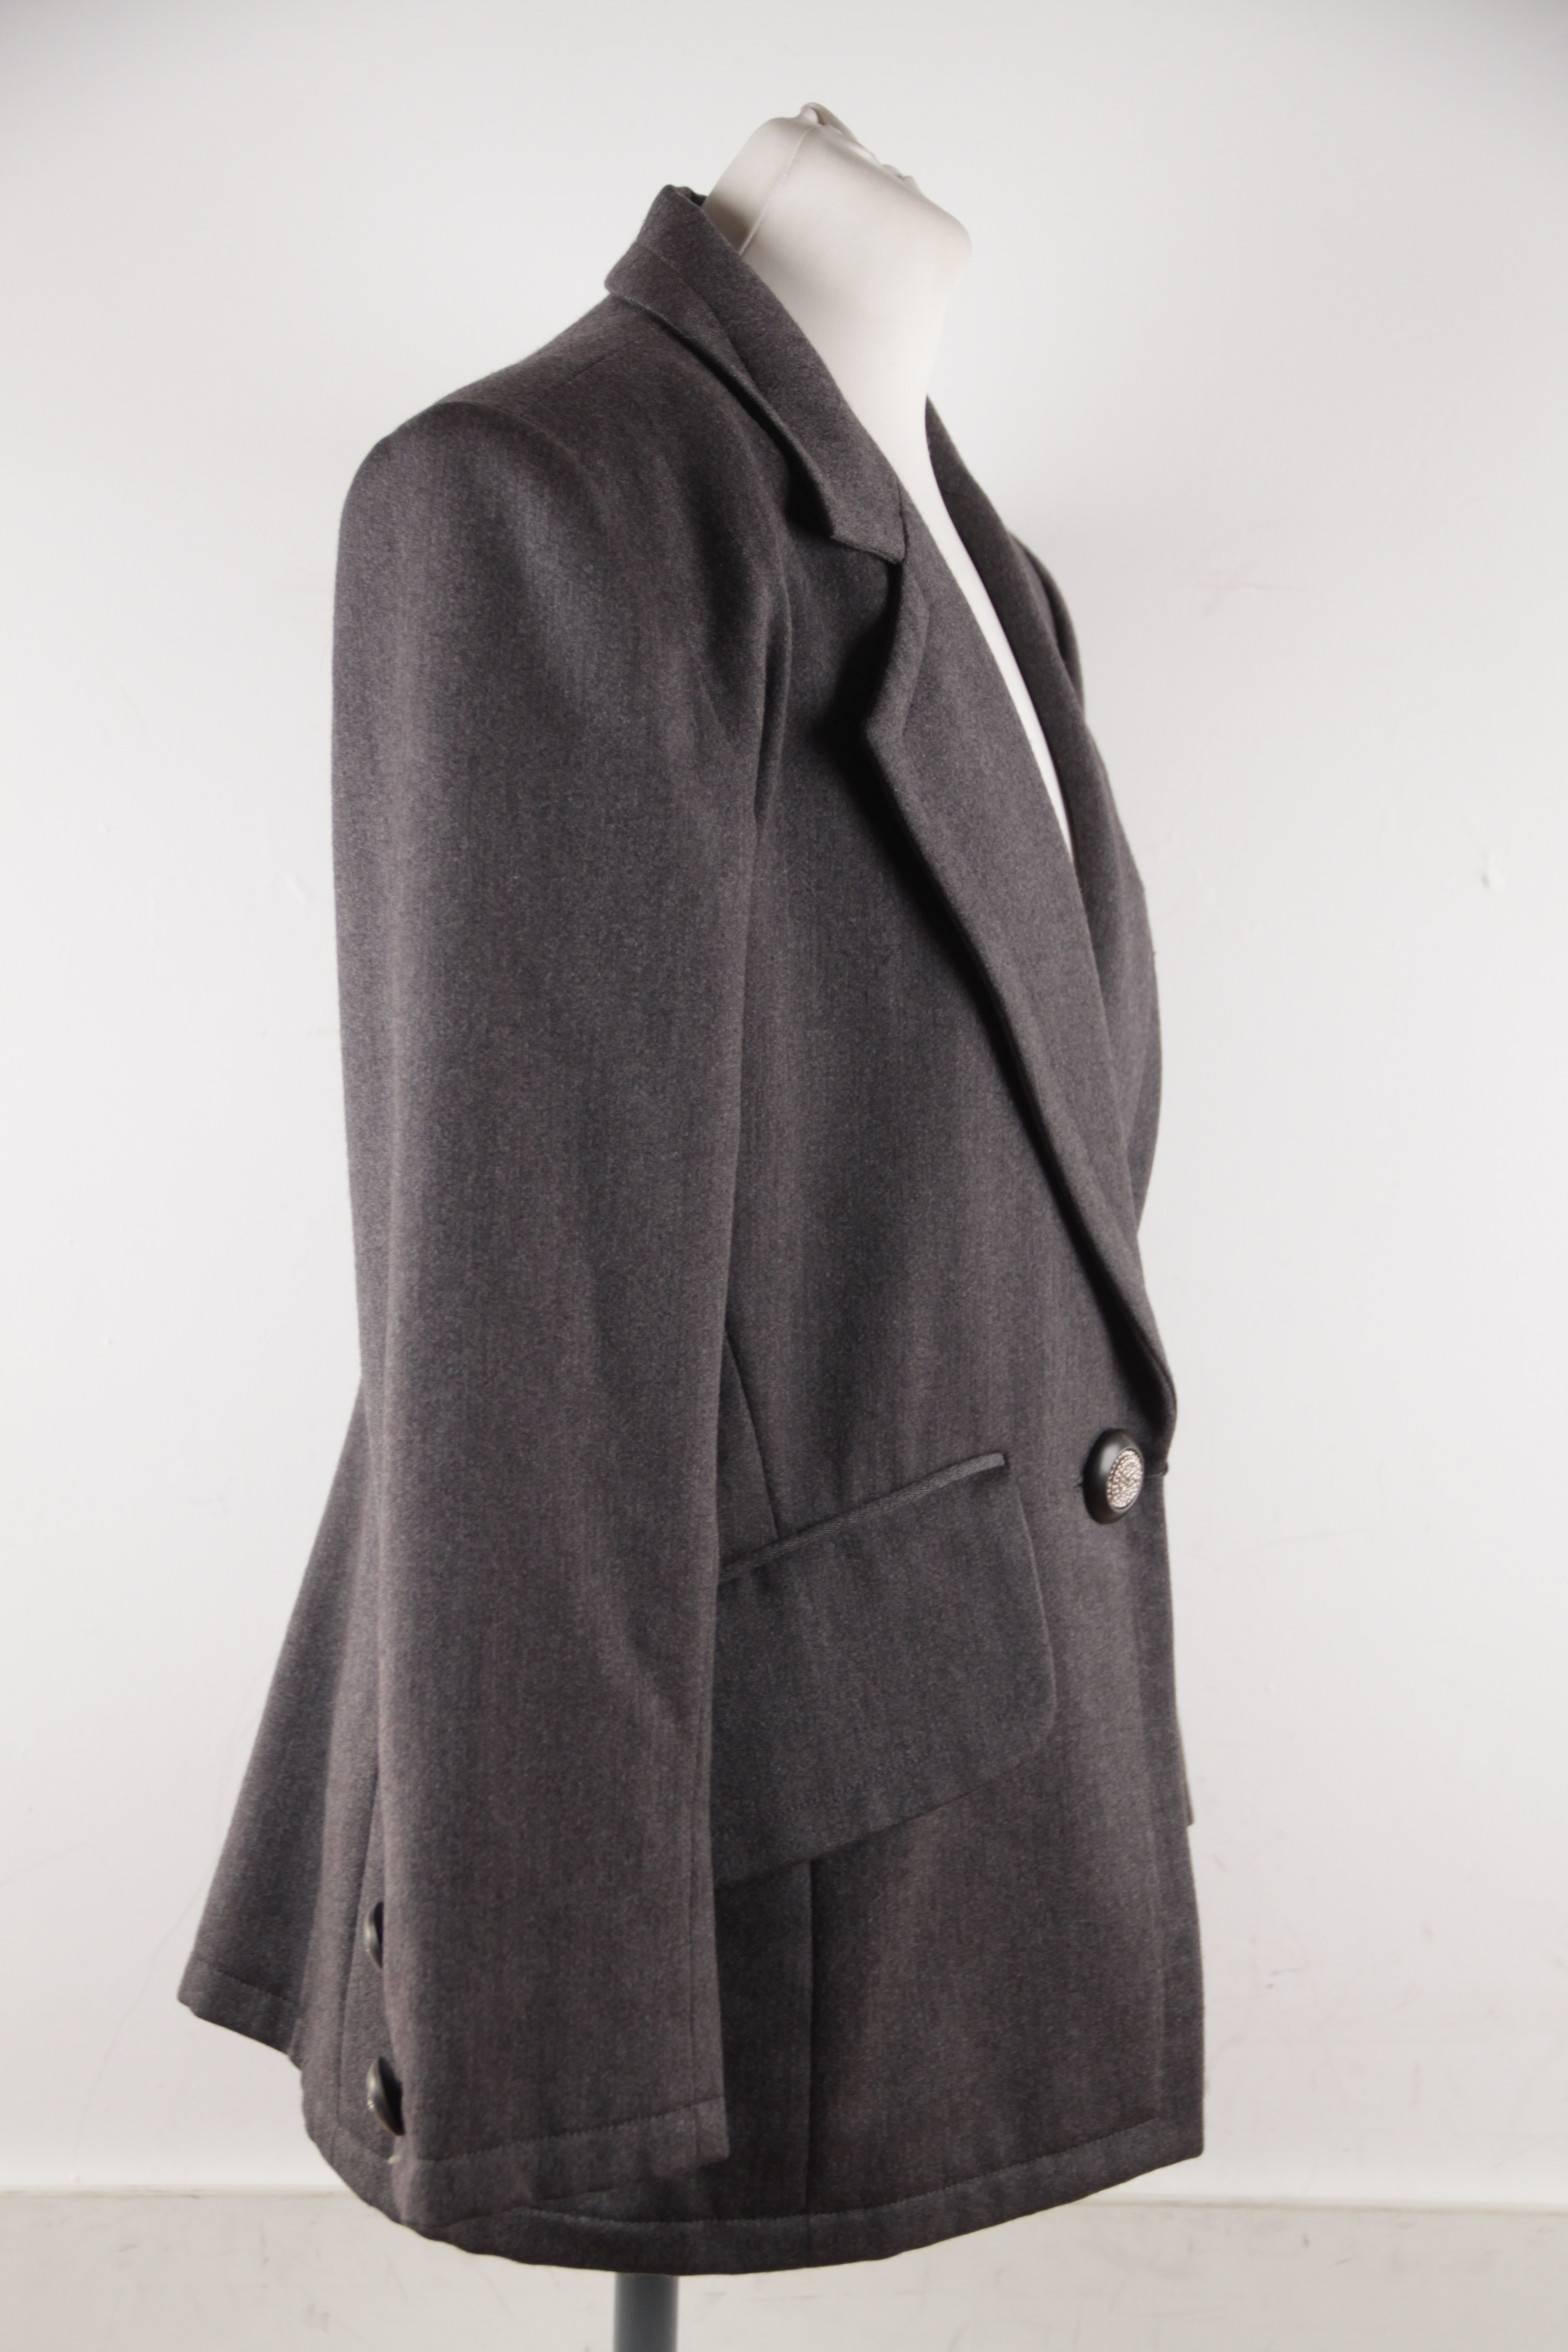 Black SAINT LAURENT RIVE GAUCHE Vintage Gray Wool BLAZER Jacket SIZE 44